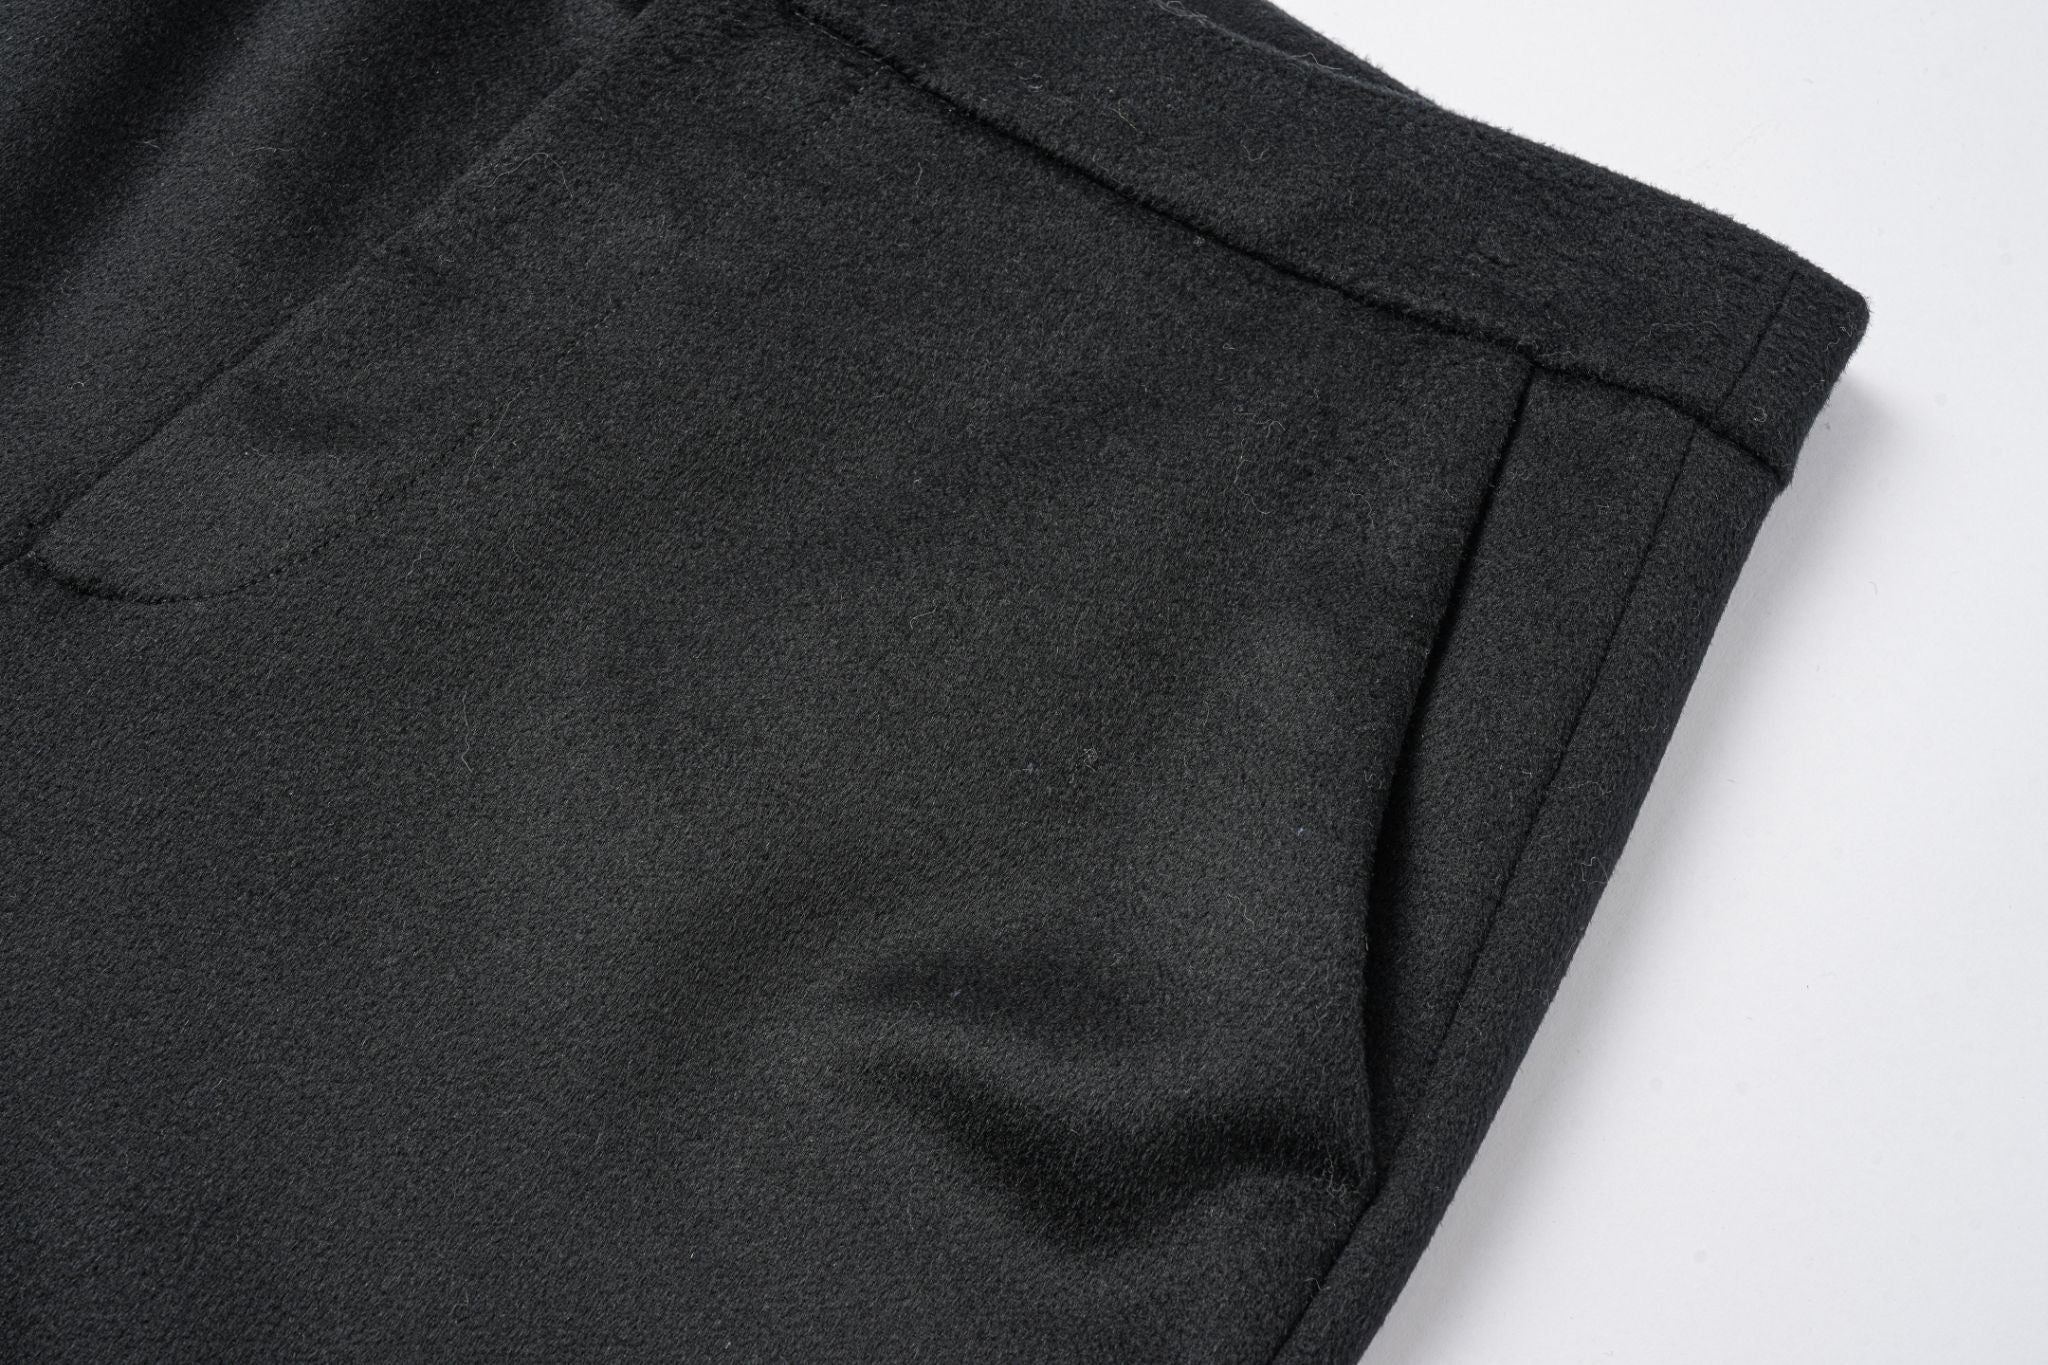 90% Wool 10% Cashmere Black Casual Wide-leg Pants